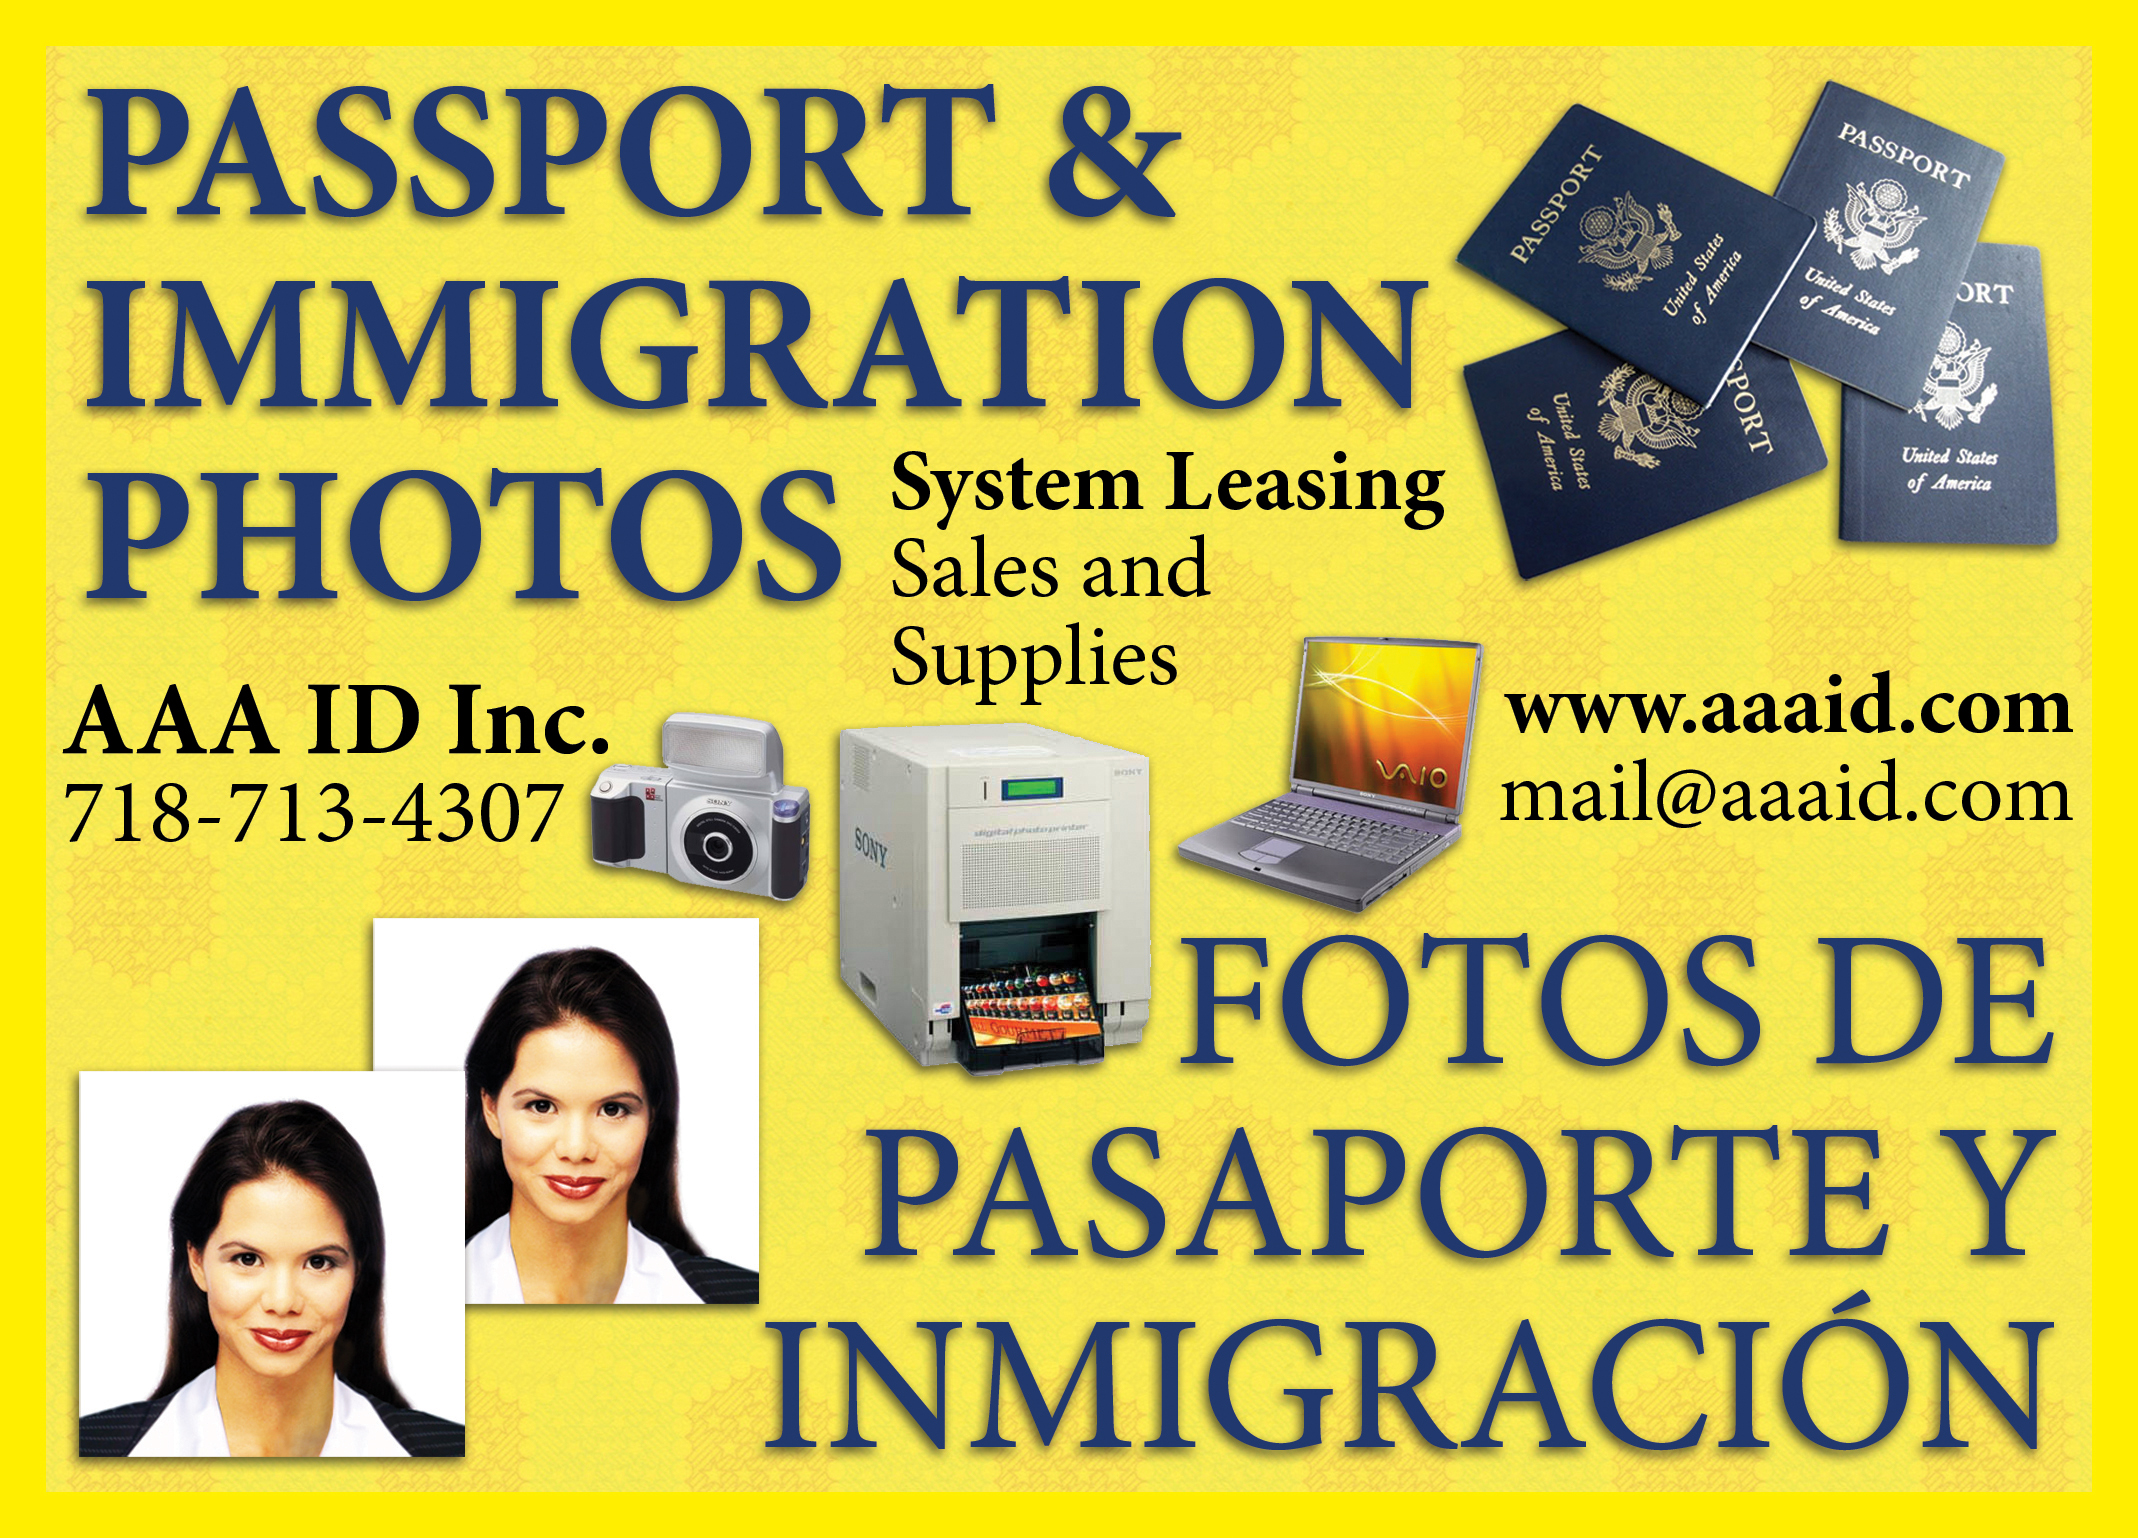 Passport & Immigration Photos